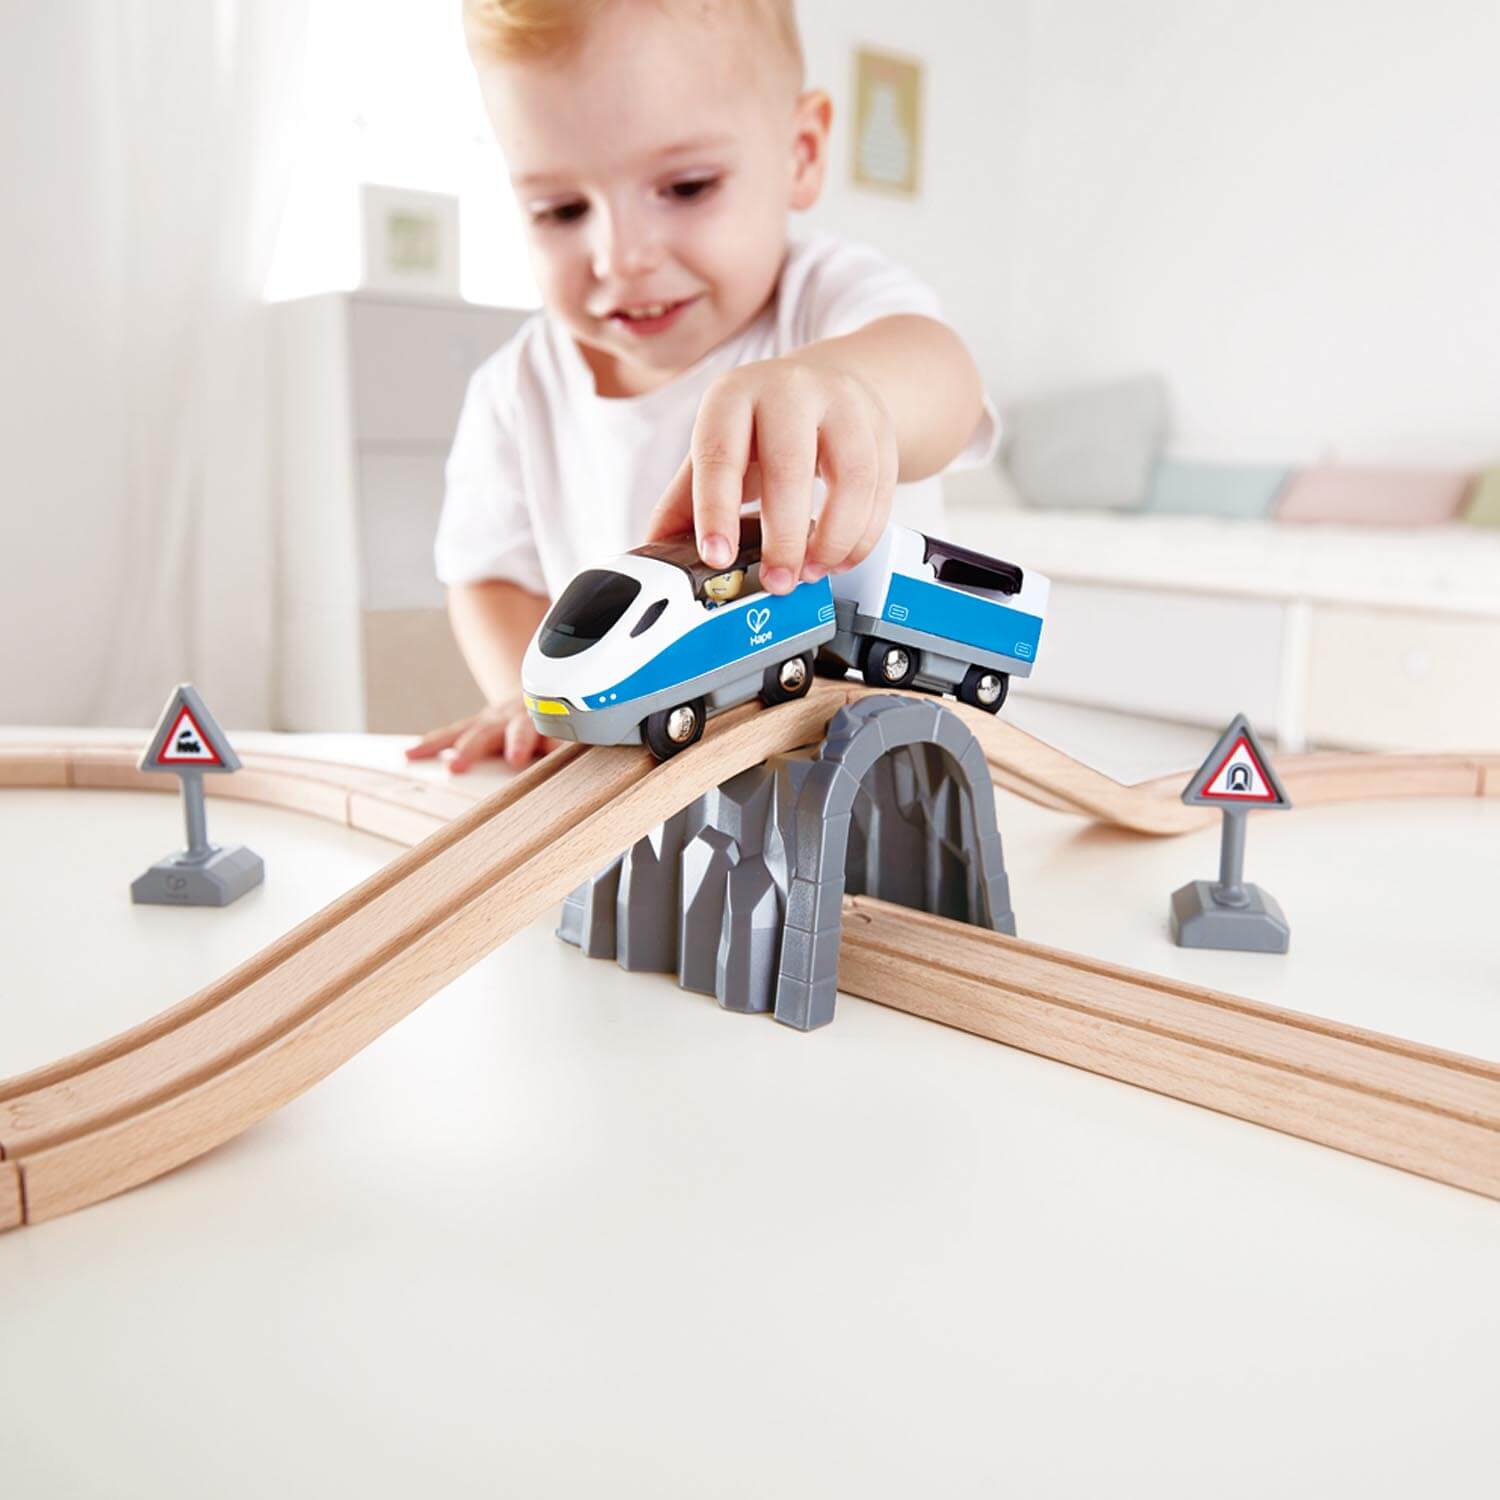 Hape Figure 8 Train Set: Safety Wooden Railway